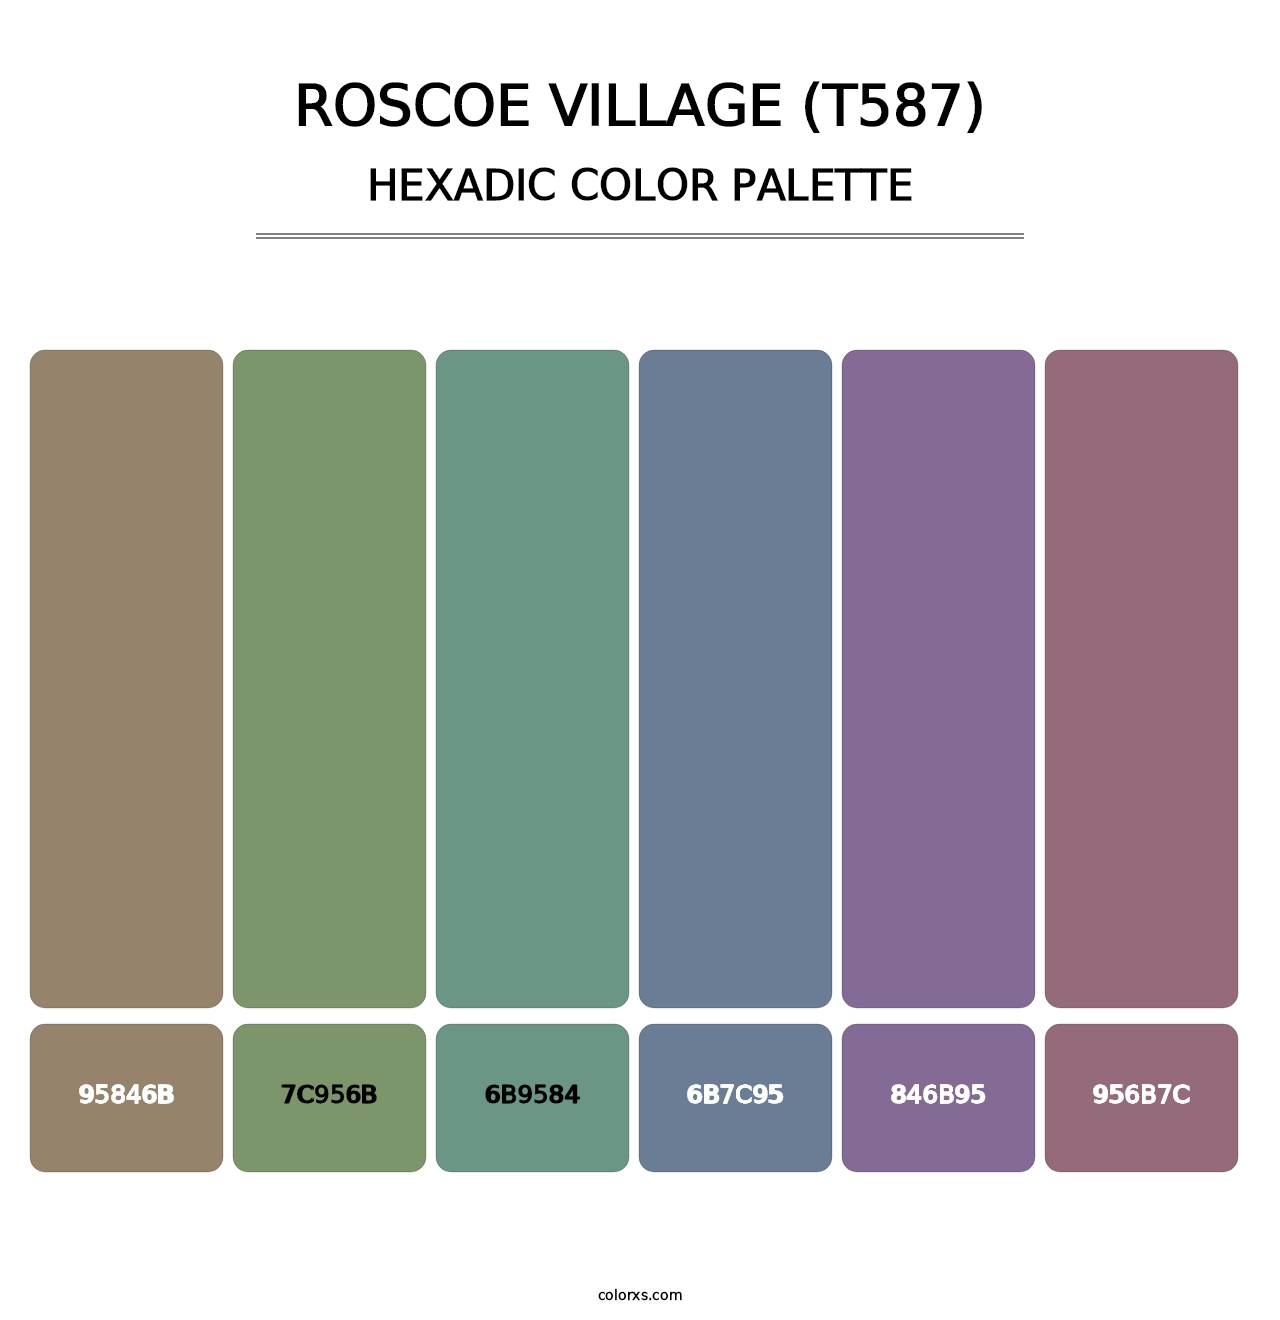 Roscoe Village (T587) - Hexadic Color Palette